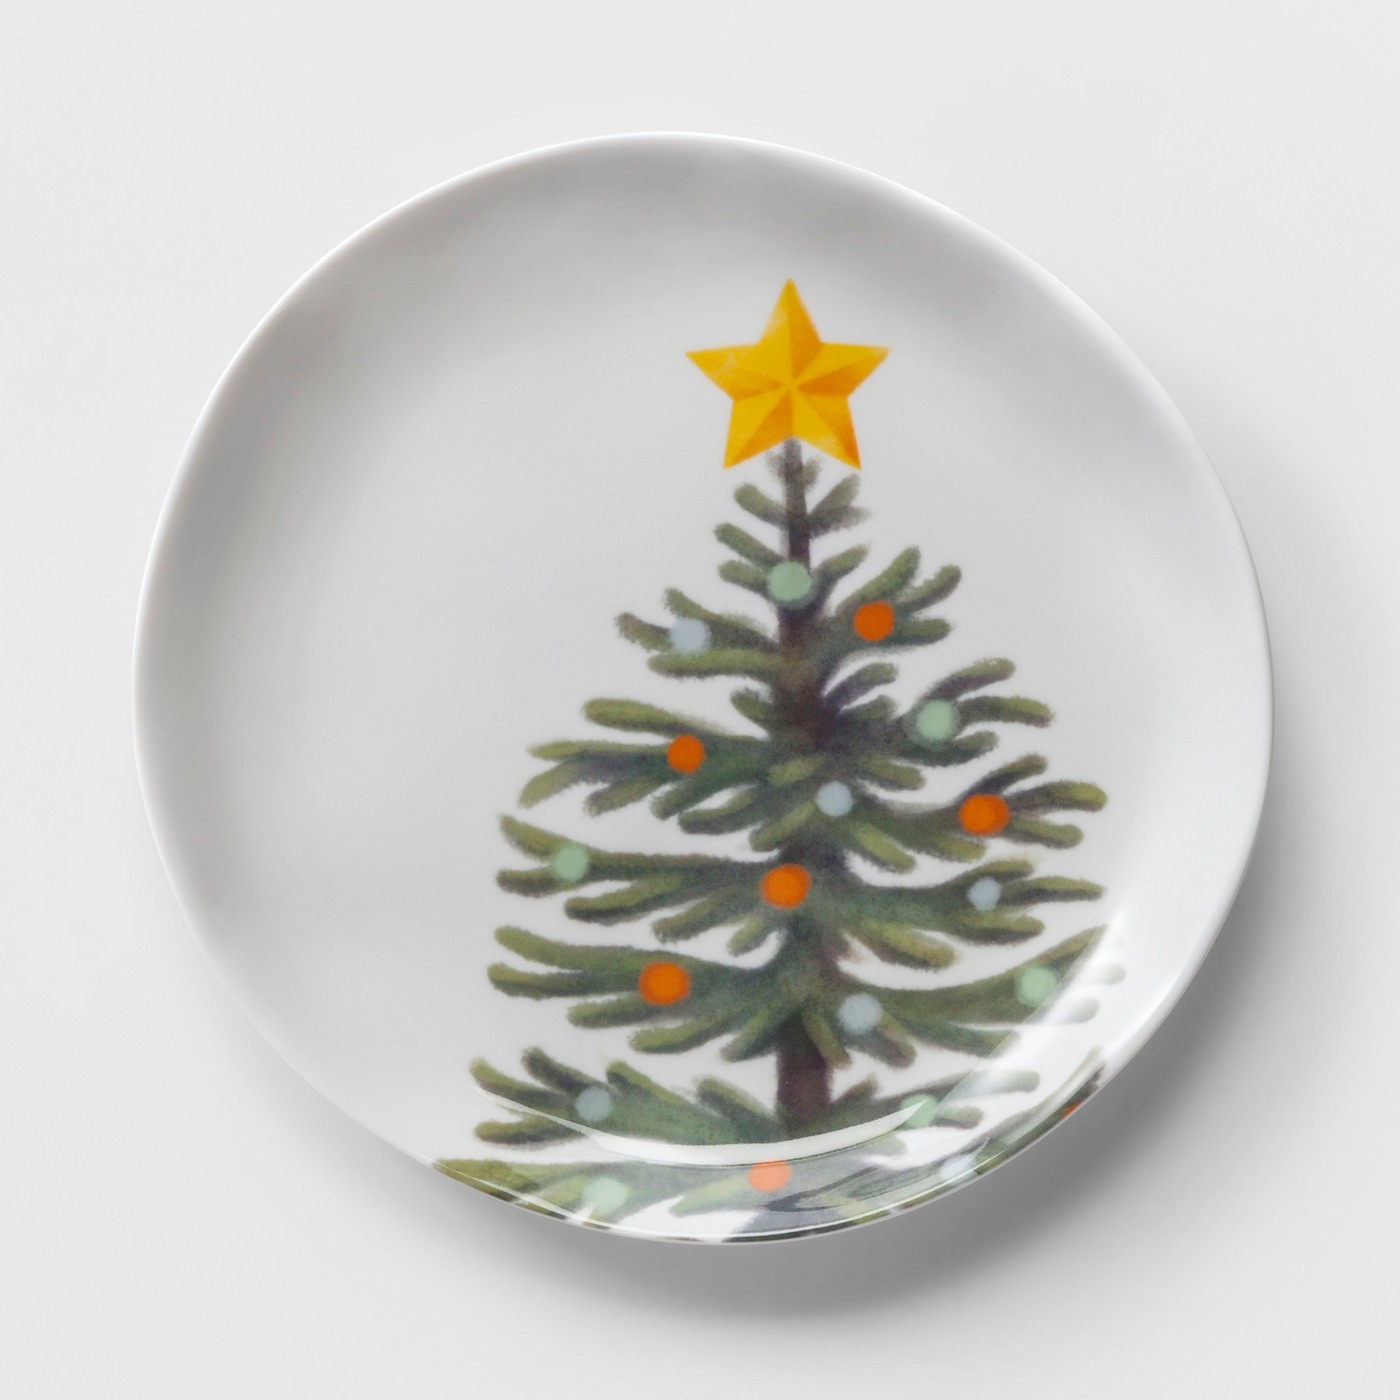 10.5" Plastic Christmas Tree Dinner Plate White/Green - Wondershopâ¢ - image 1 of 1